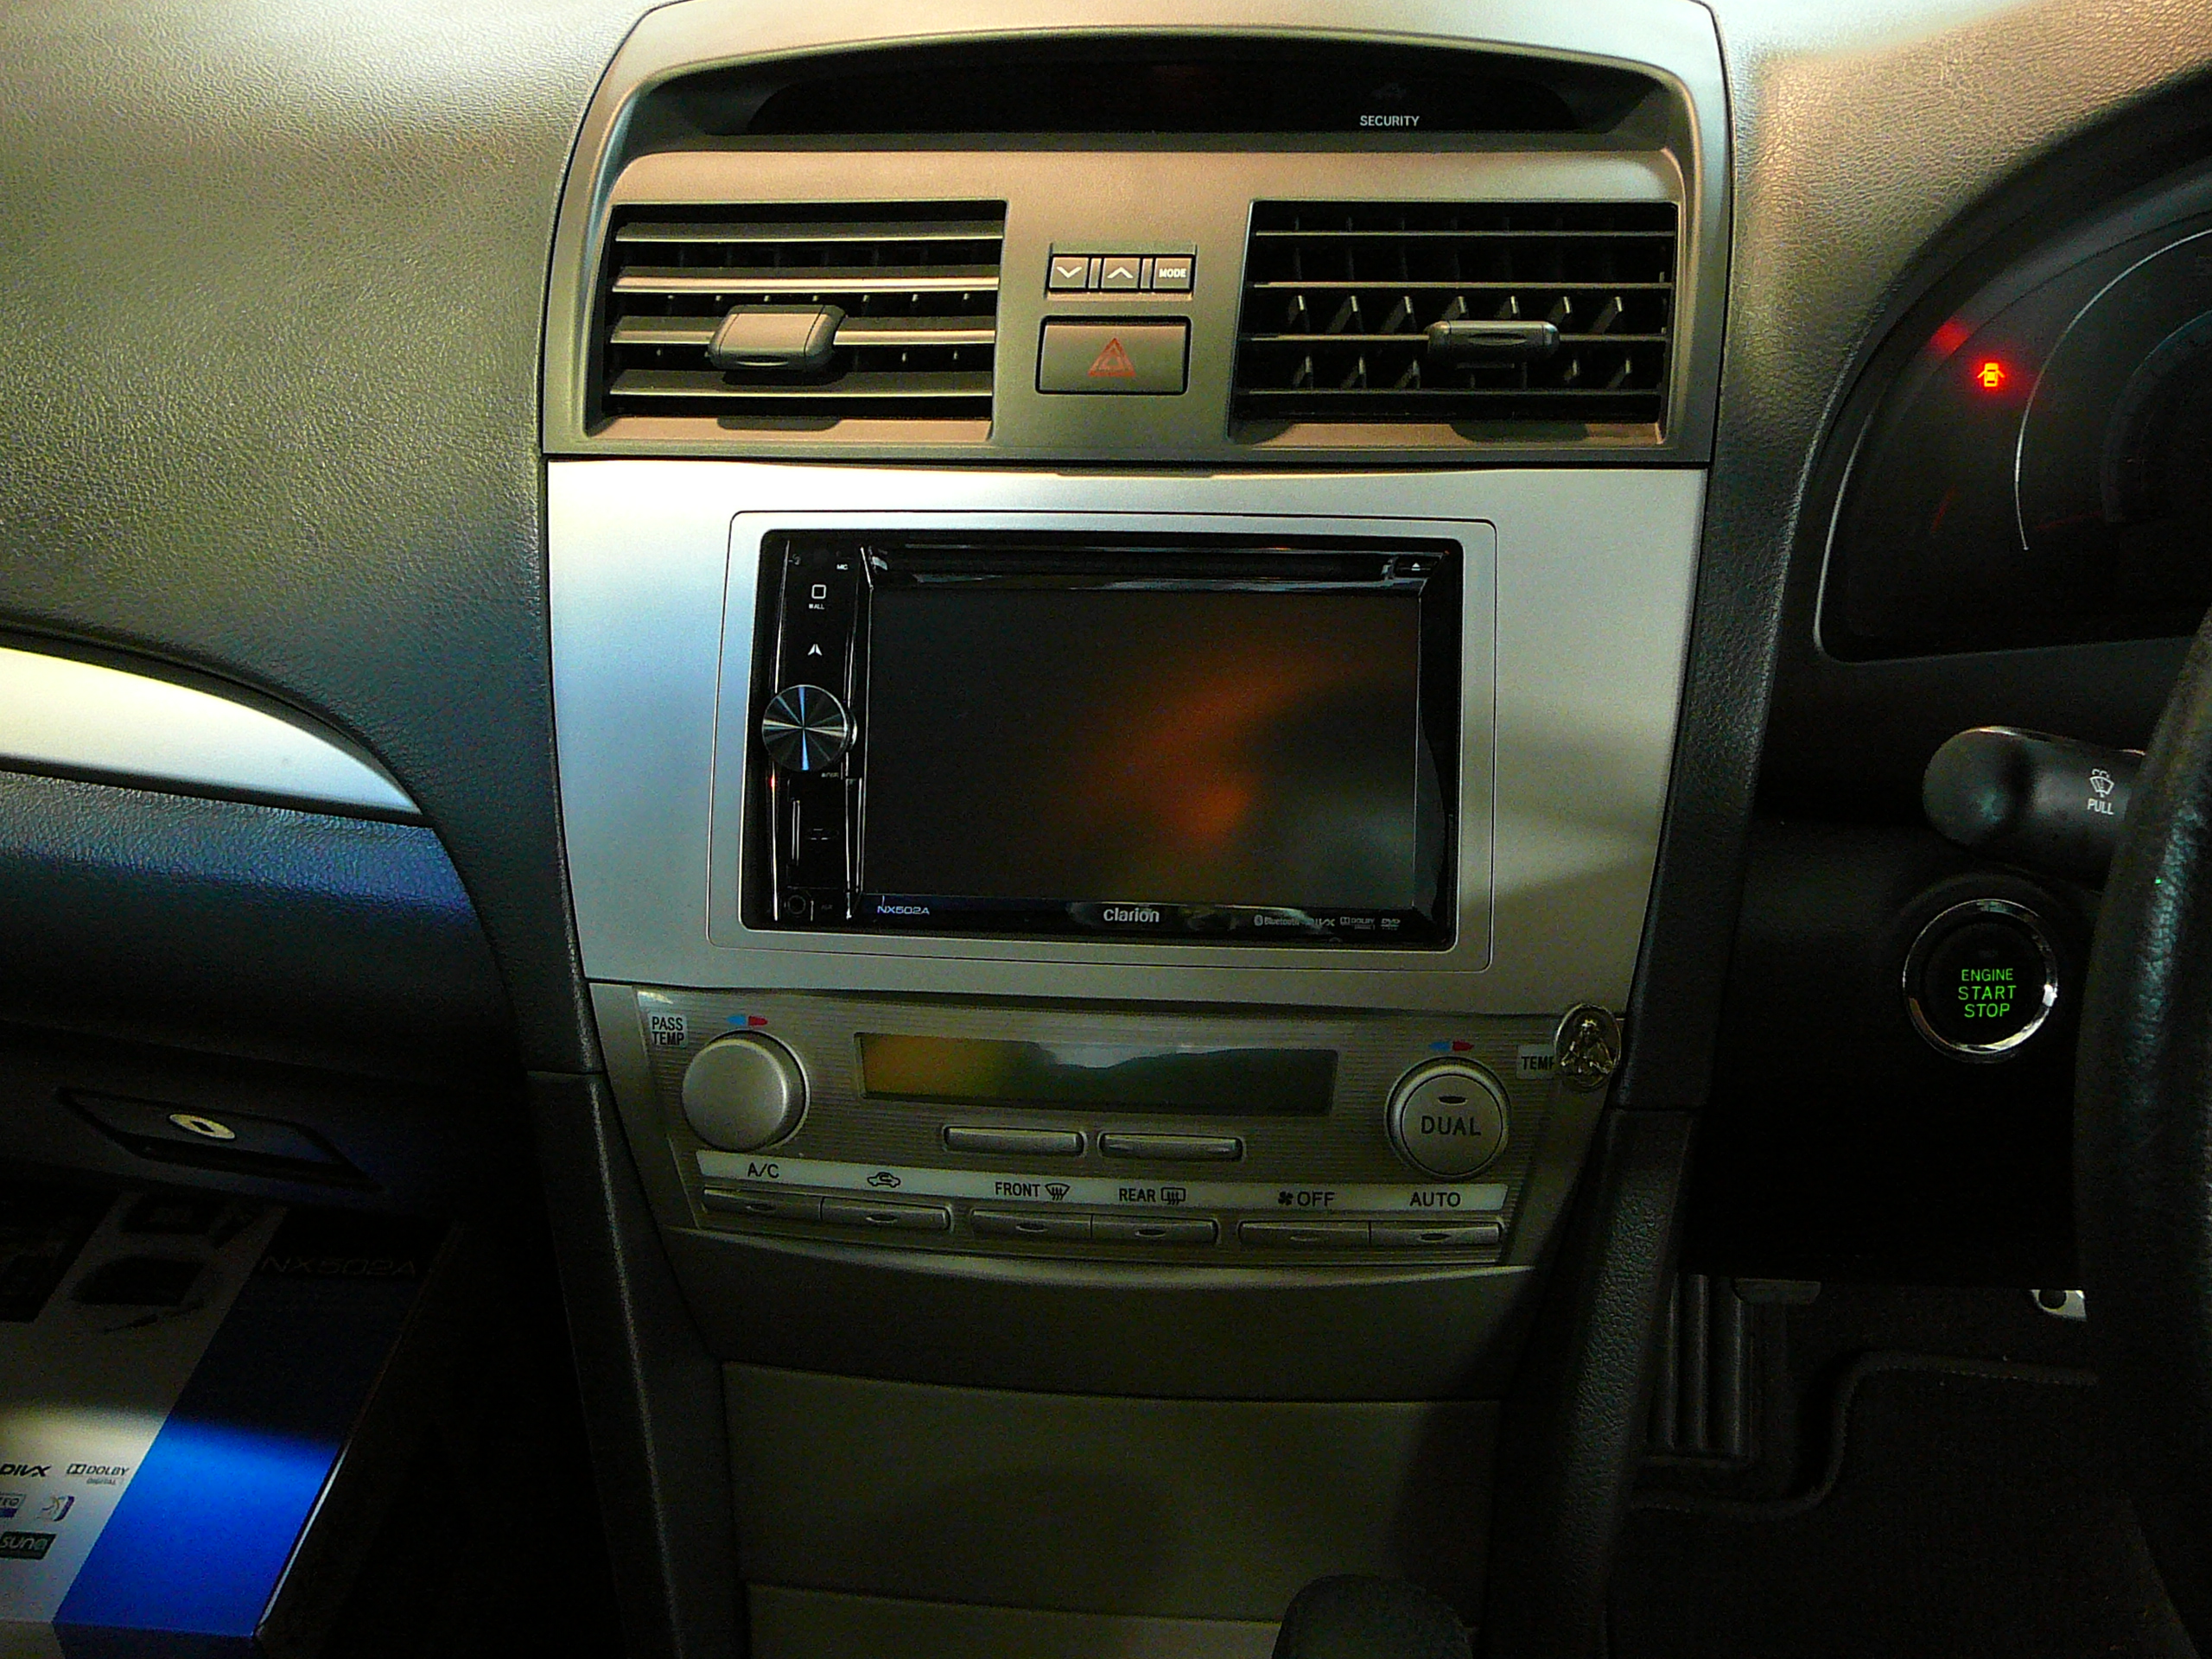 Toyota Aurion 2006, Clarion GPS Navigation Installation